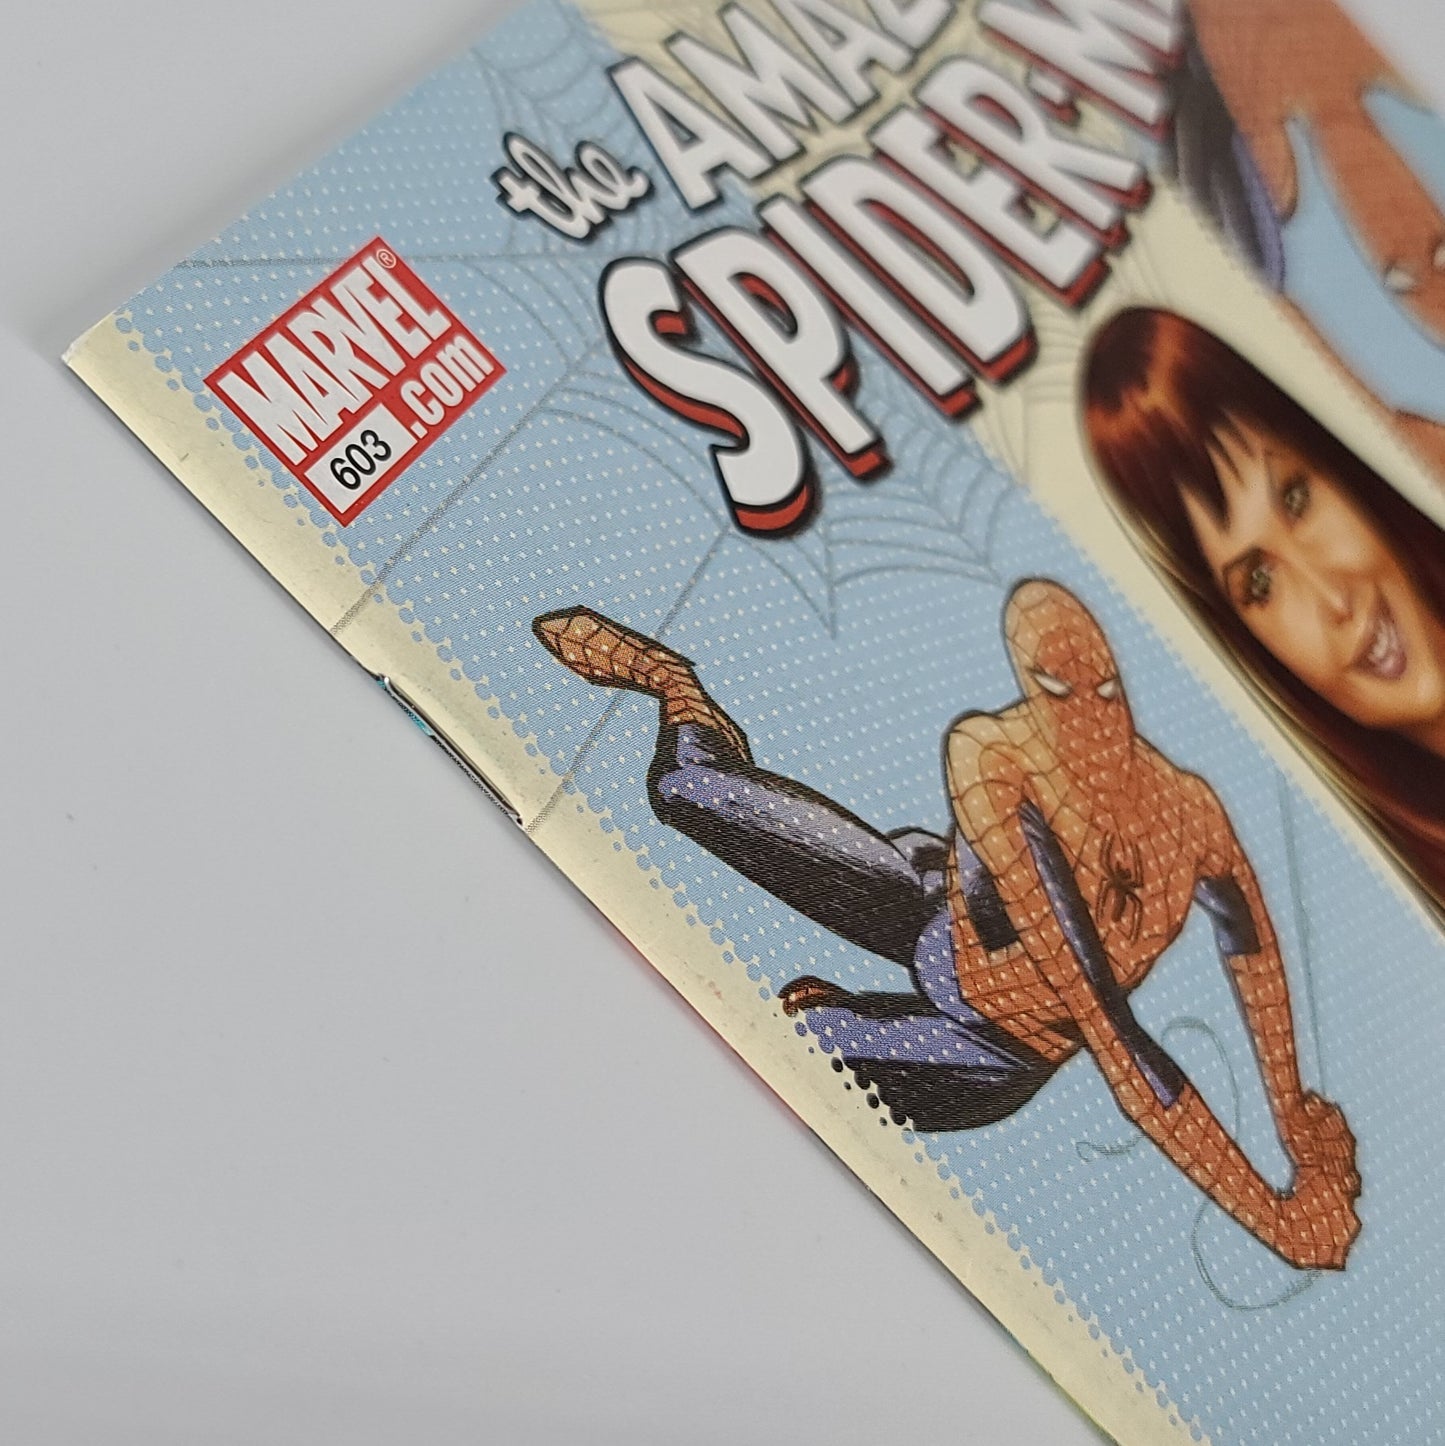 The Amazing Spider-Man #603 (2009)